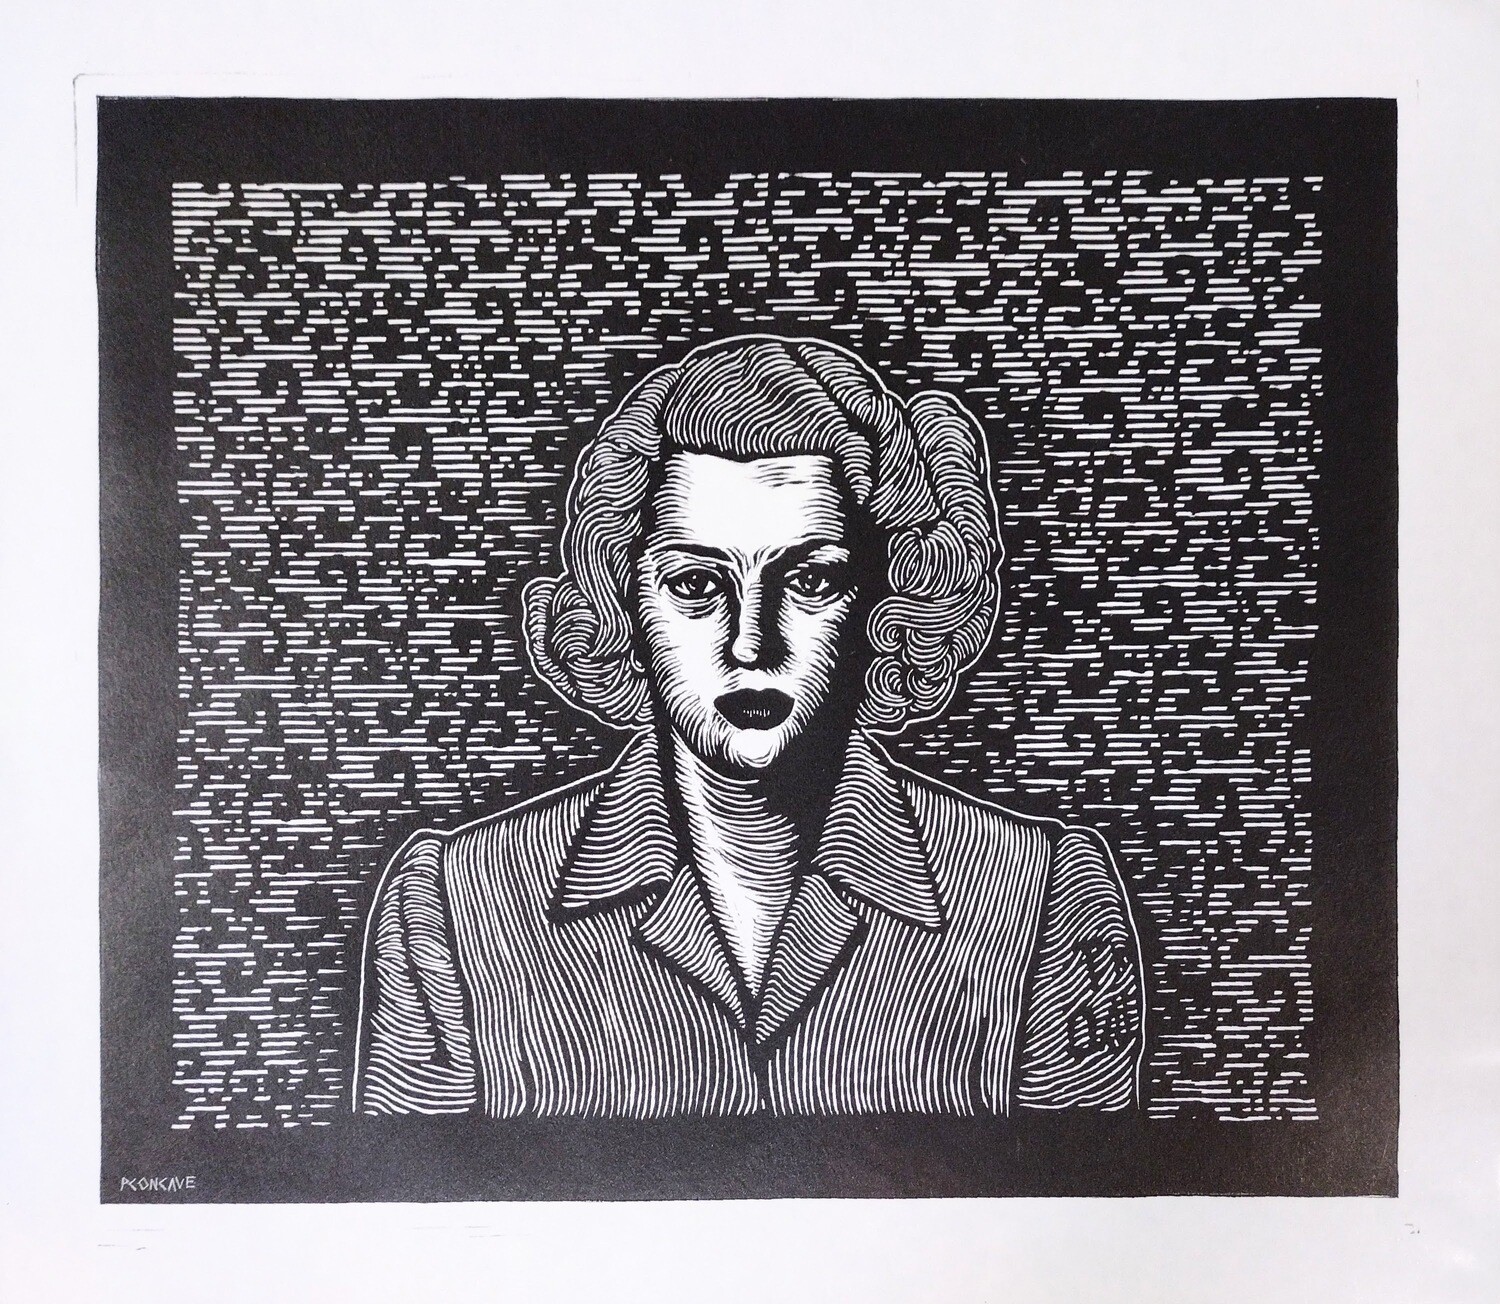 Lana Turner “Postman Always Rings Twice” - Lino Print by PConcave